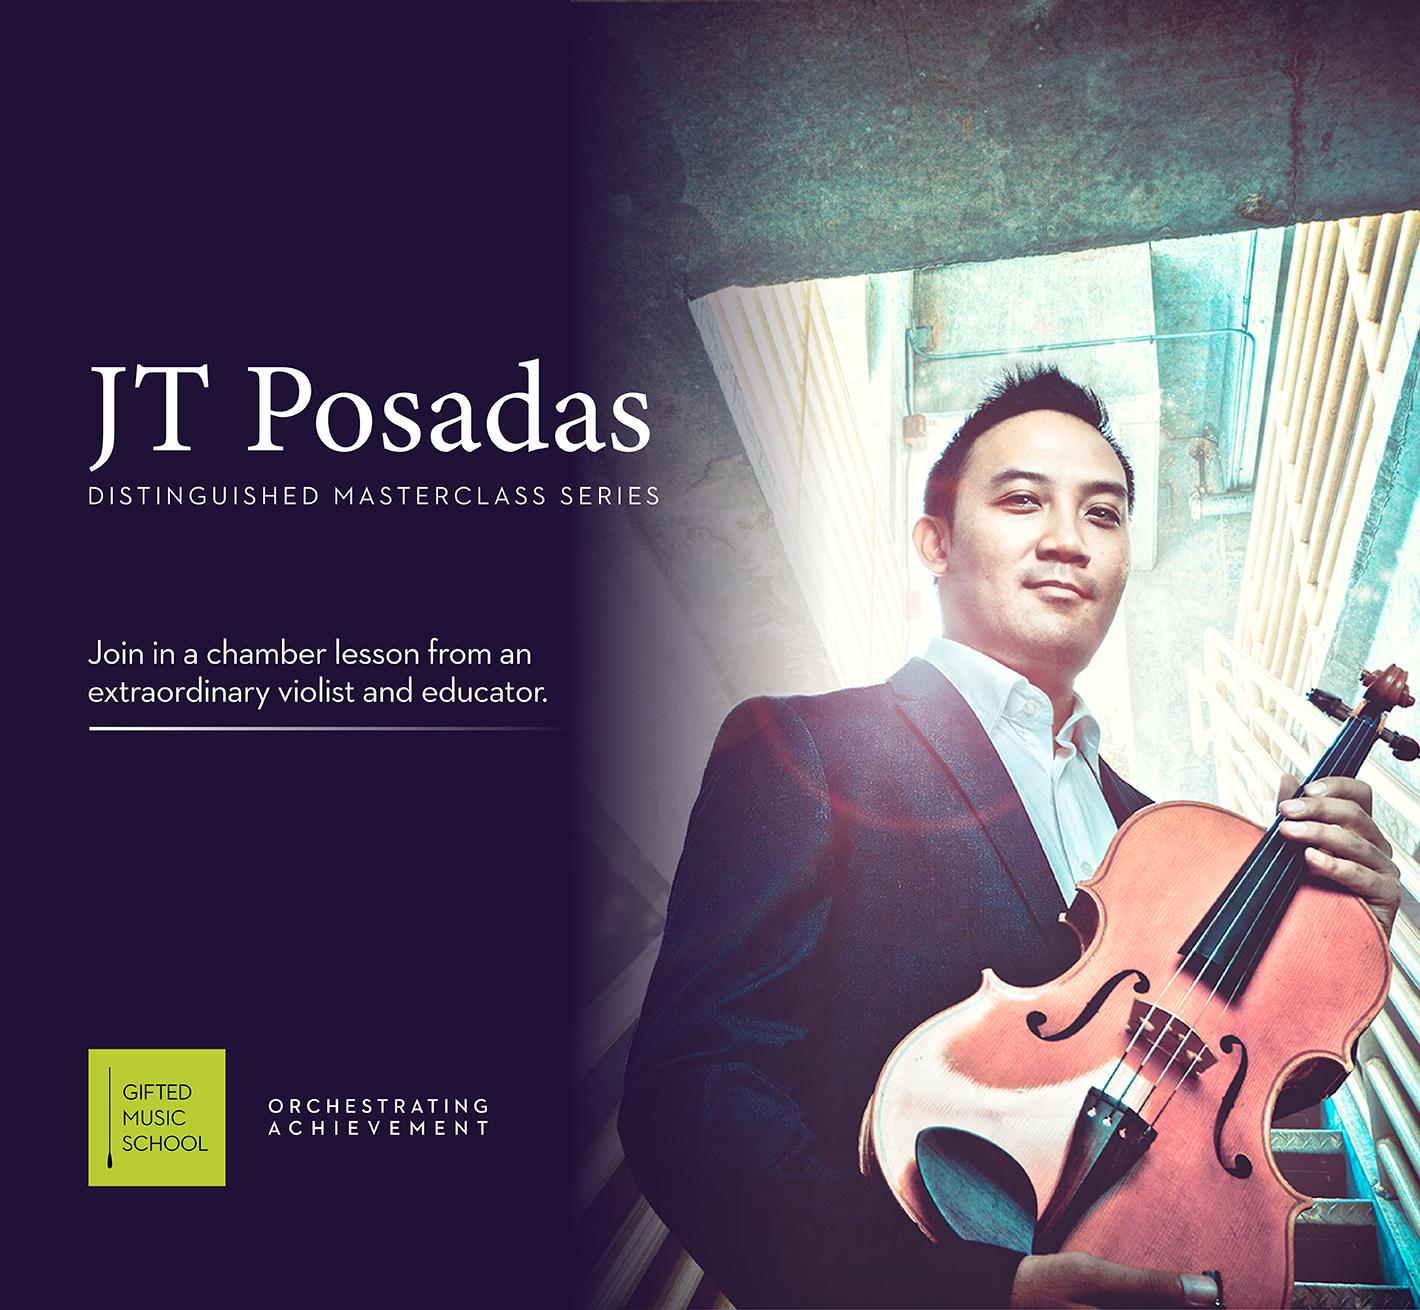 JT Posadas Masterclass Image